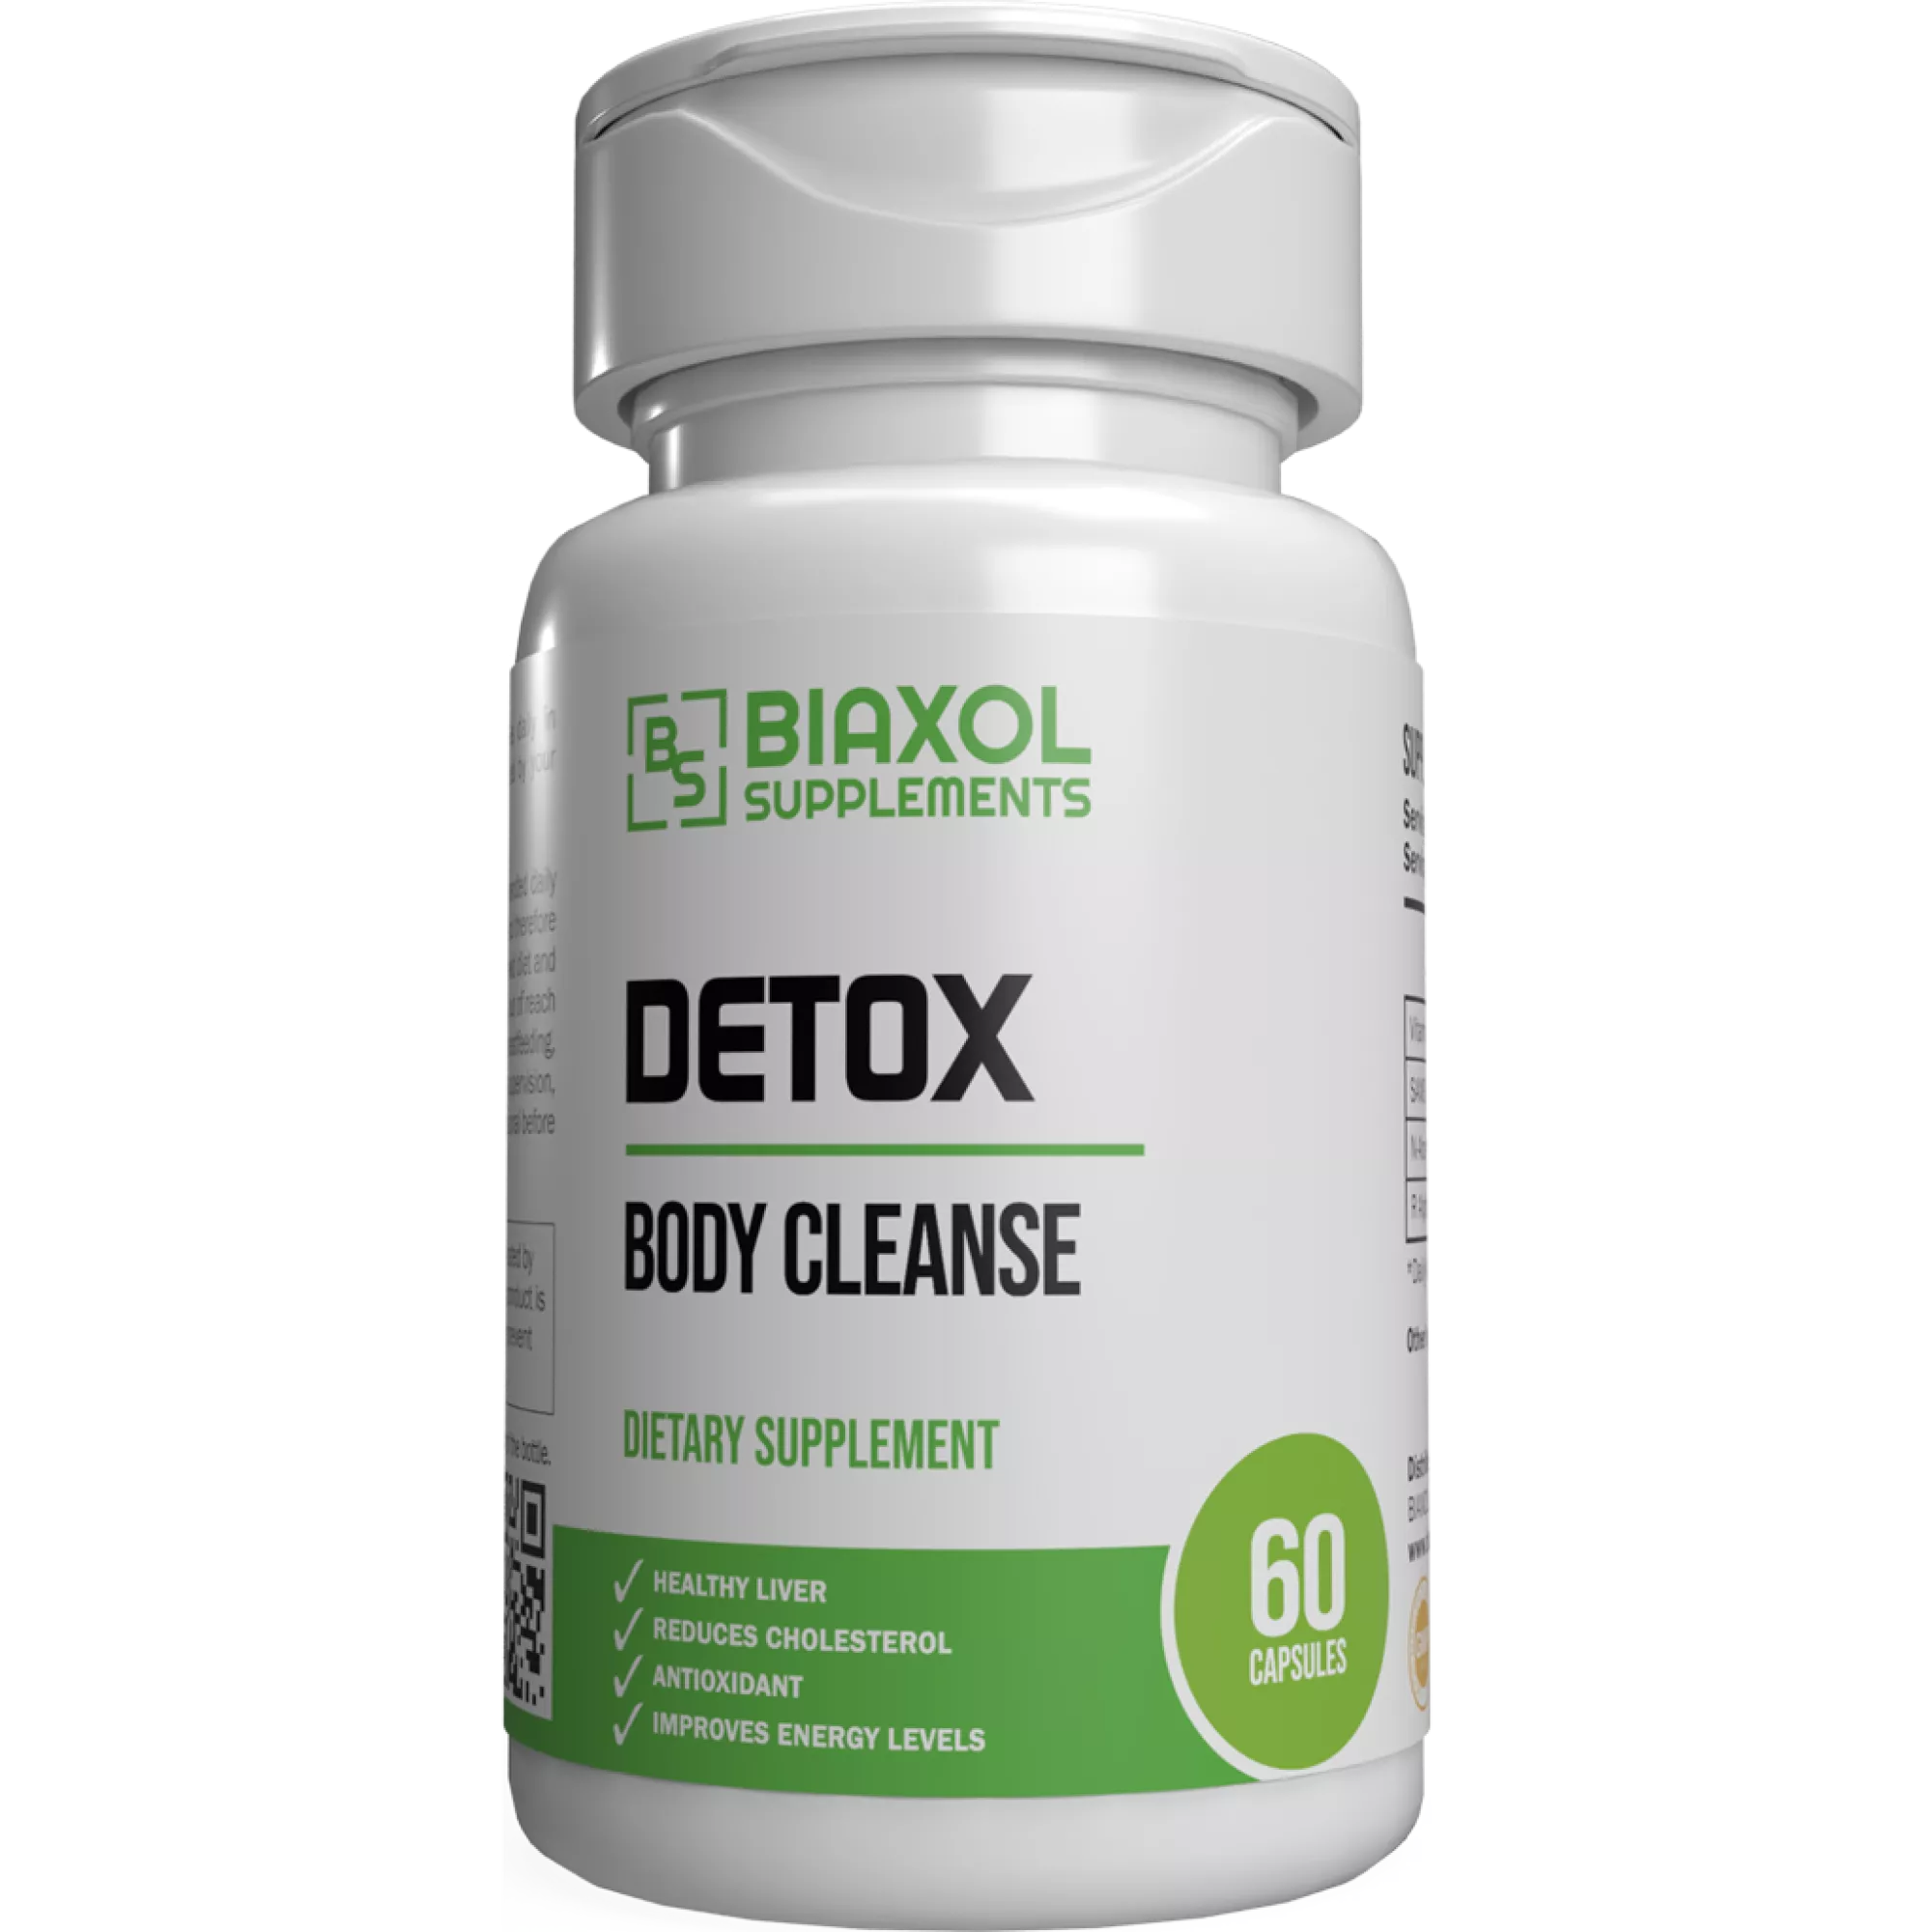 DETOX (Body Cleanse), Biaxol, Köp steroider online - www.deuspower.shop